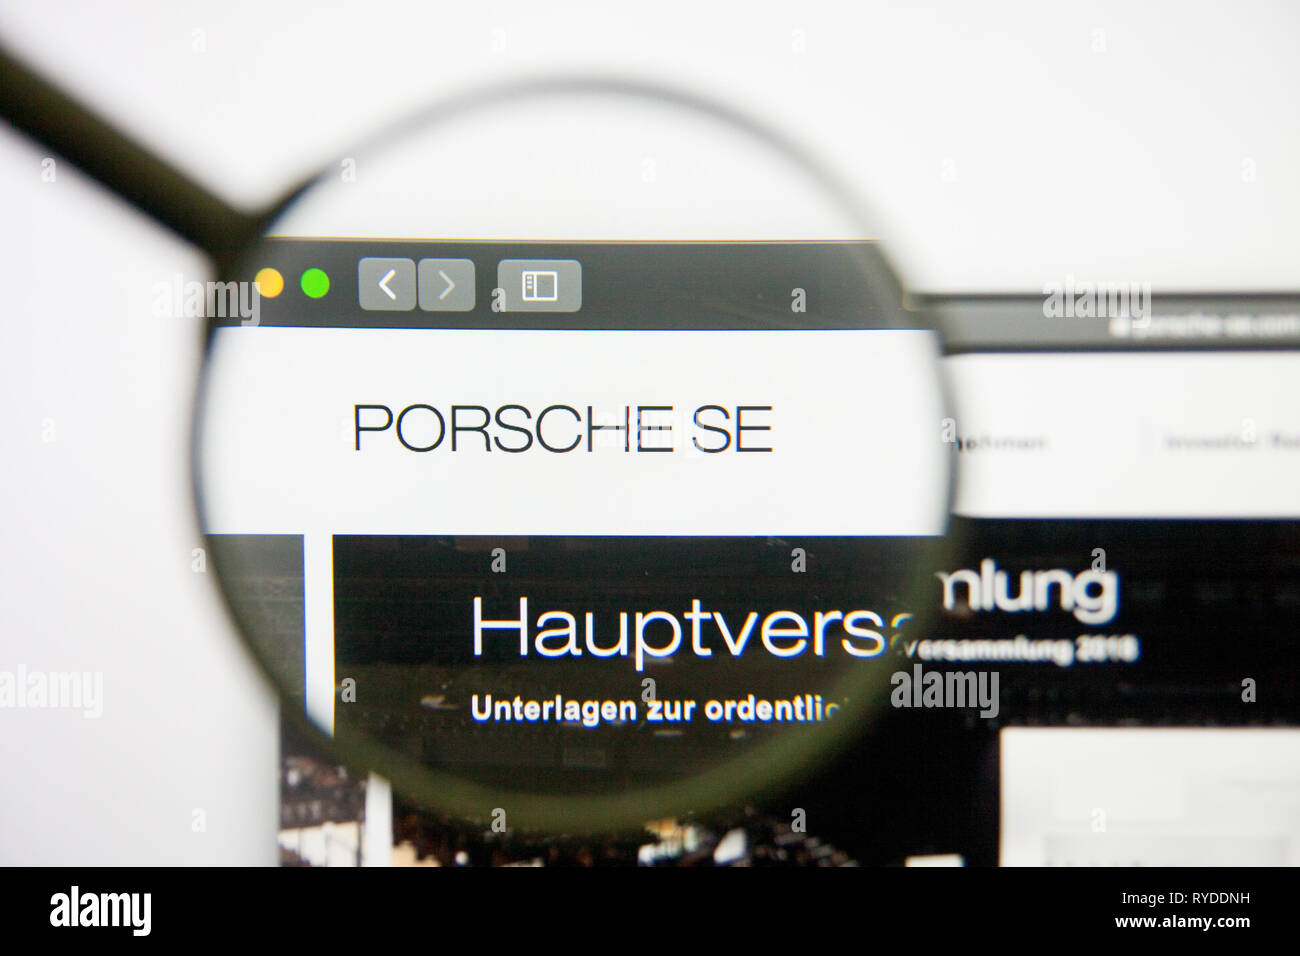 Los Angeles, California, USA - 14 February 2019: Porsche Automobil Holding website homepage. Porsche Automobil Holding logo visible on screen. Stock Photo